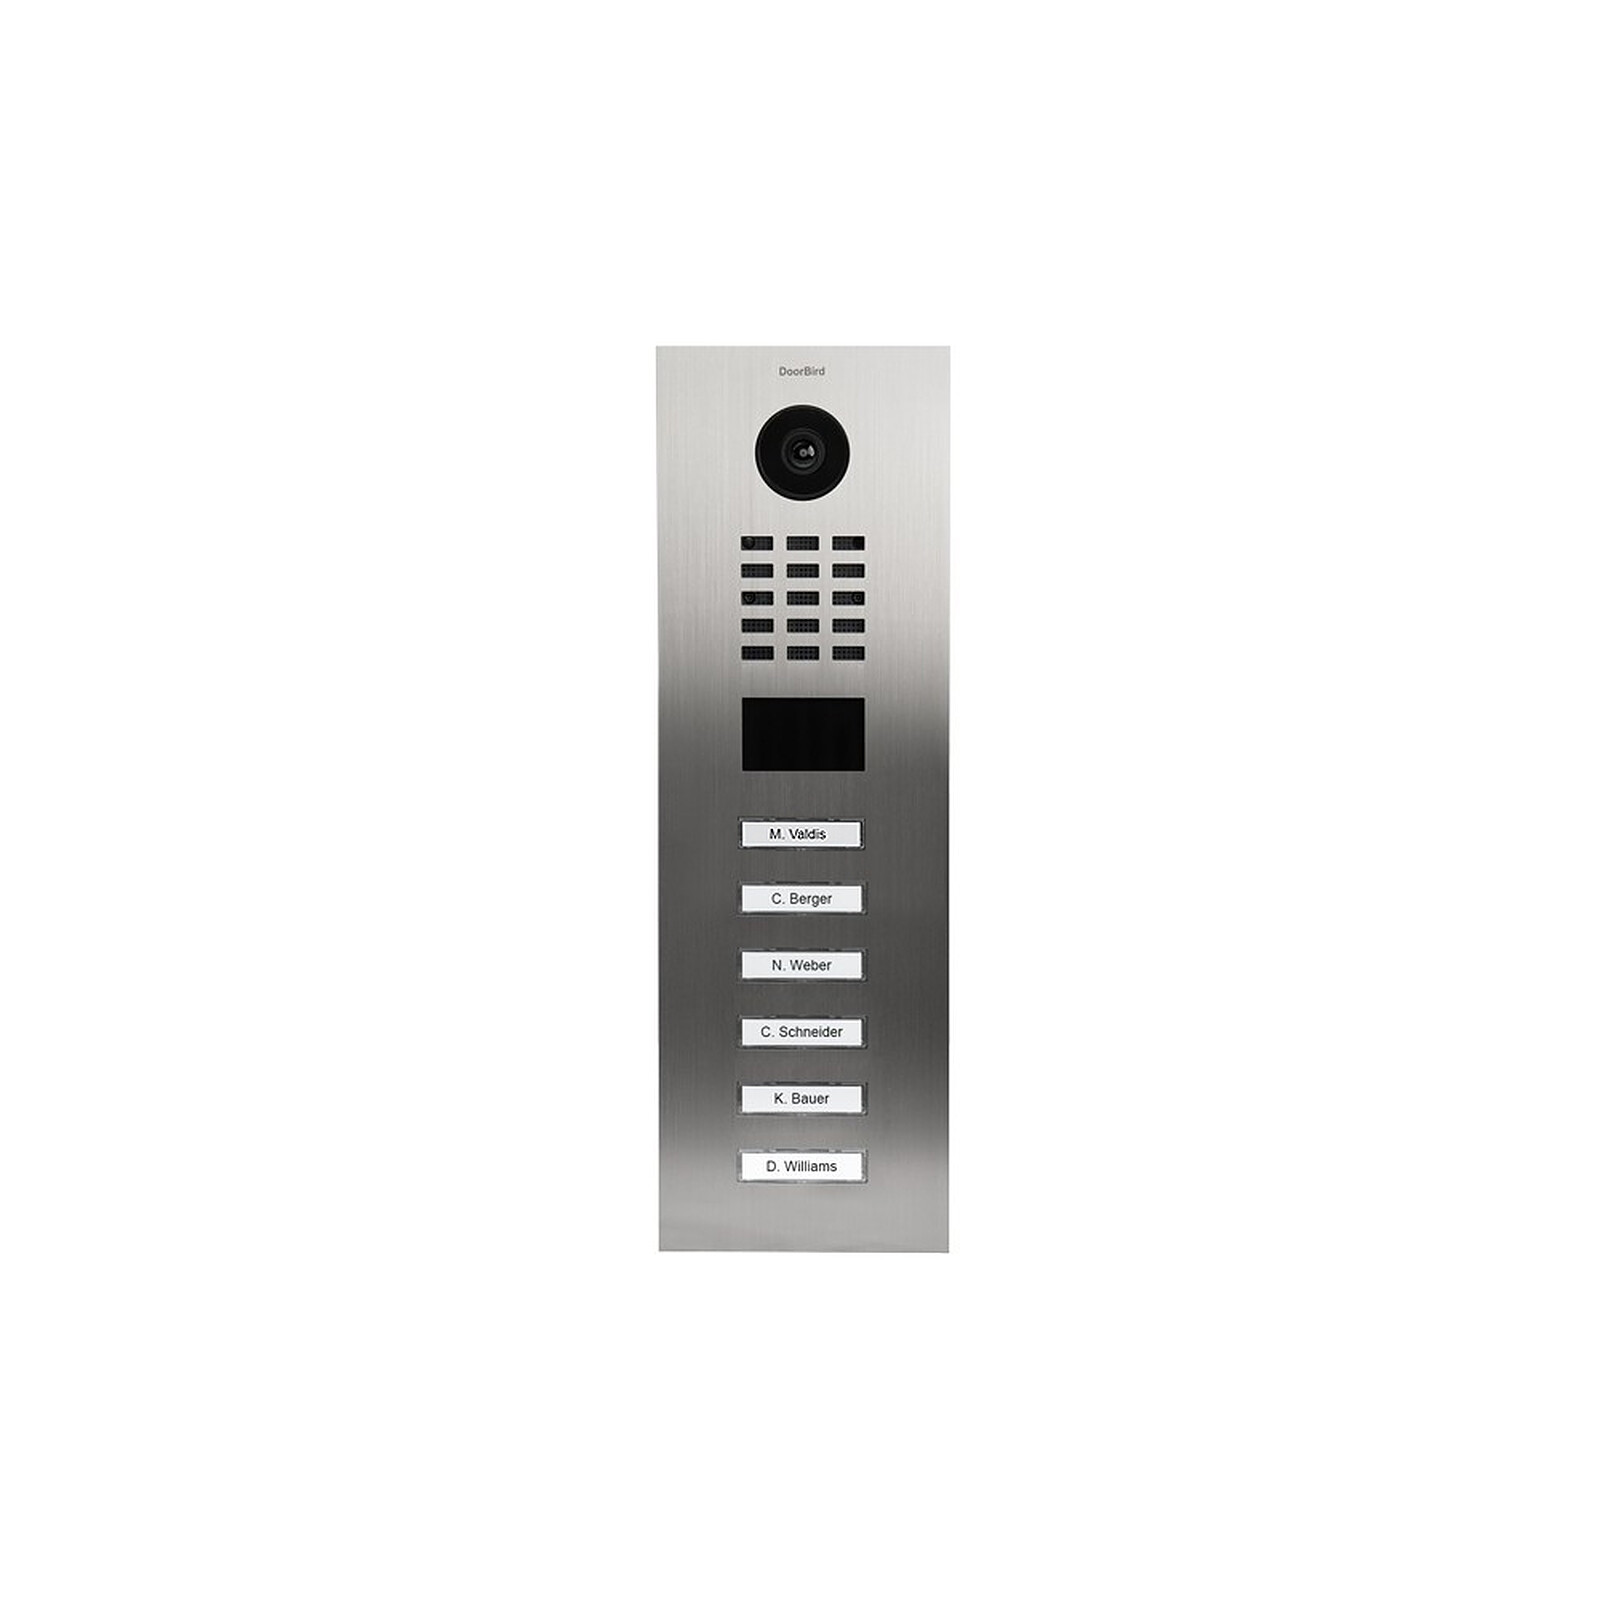 DoorBird D2101IKH - Portier interphone vidéo connecté avec lecteur